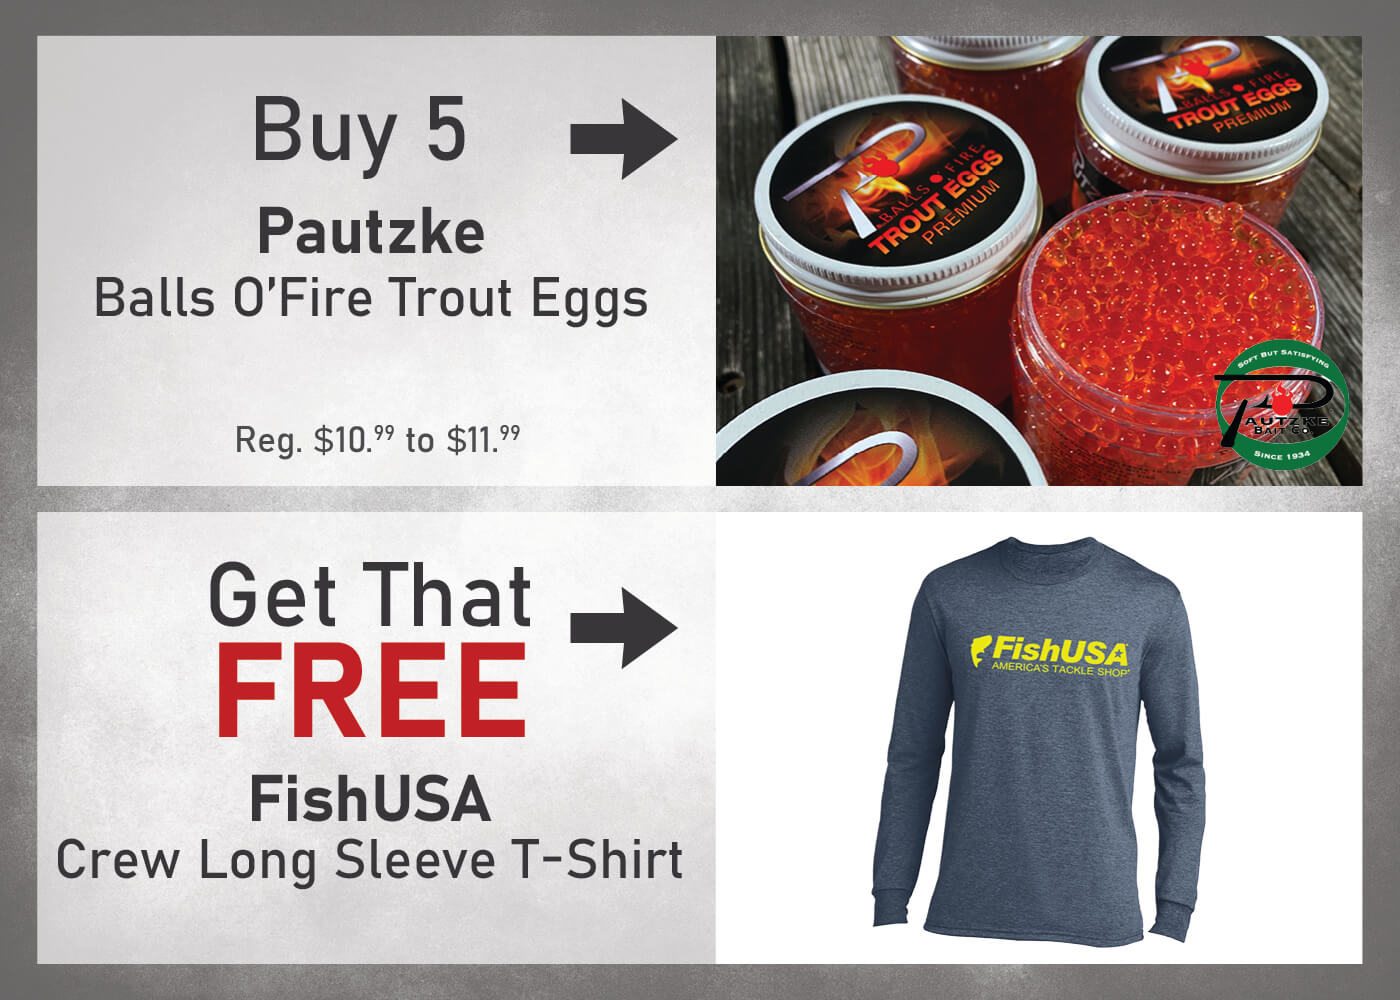 Buy 5 Pautzke Balls O' Fire Trout Eggs & Get a FREE FishUSA Men's Crew Long Sleeve T-Shirt